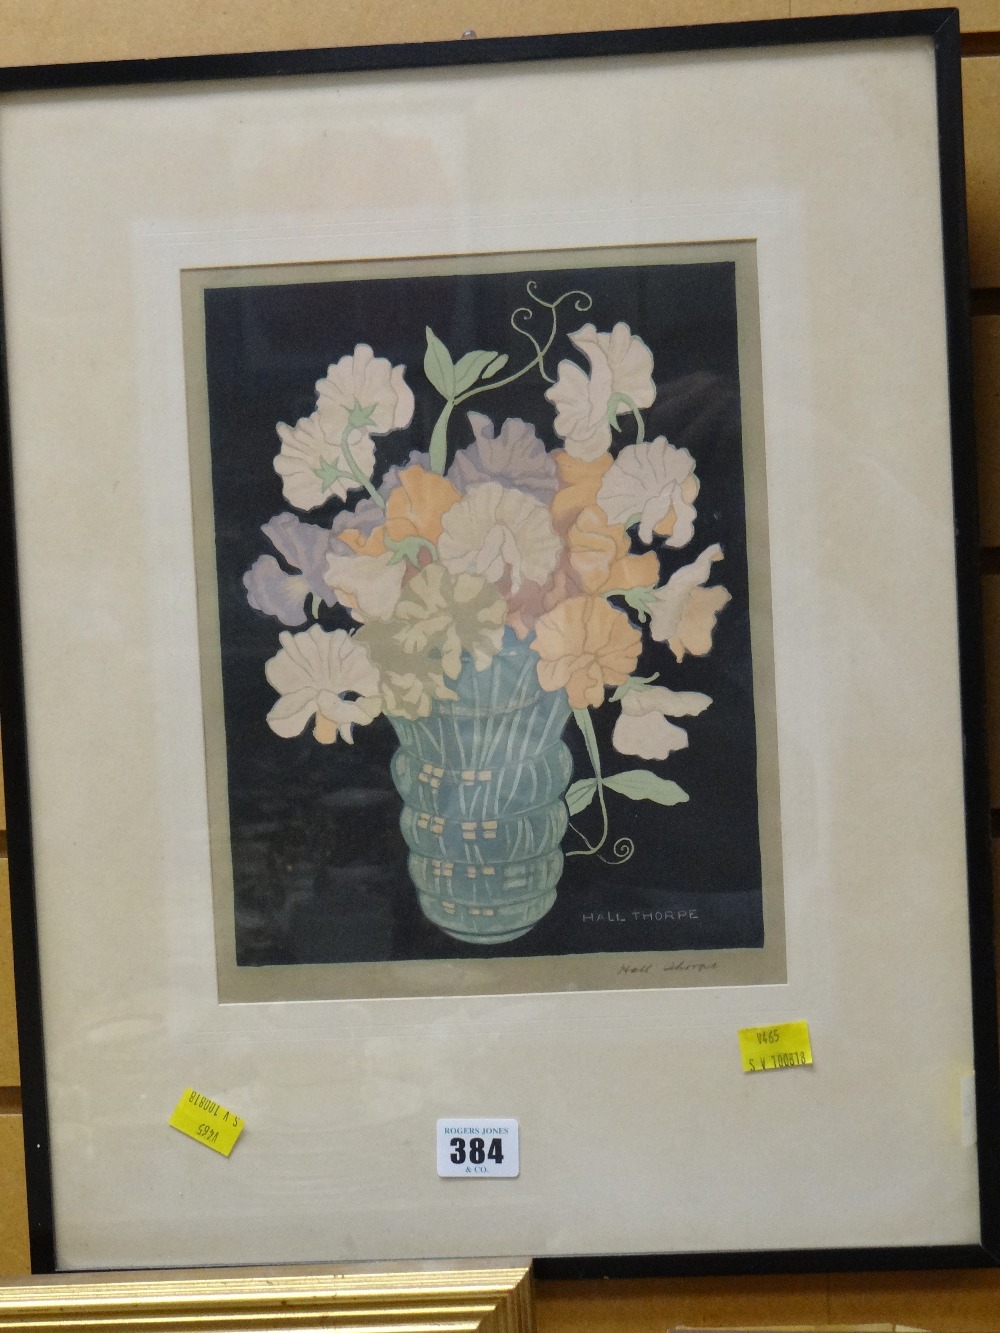 Vintage framed woodblock print - still life of sweet peas in a vase by HALL THORPE